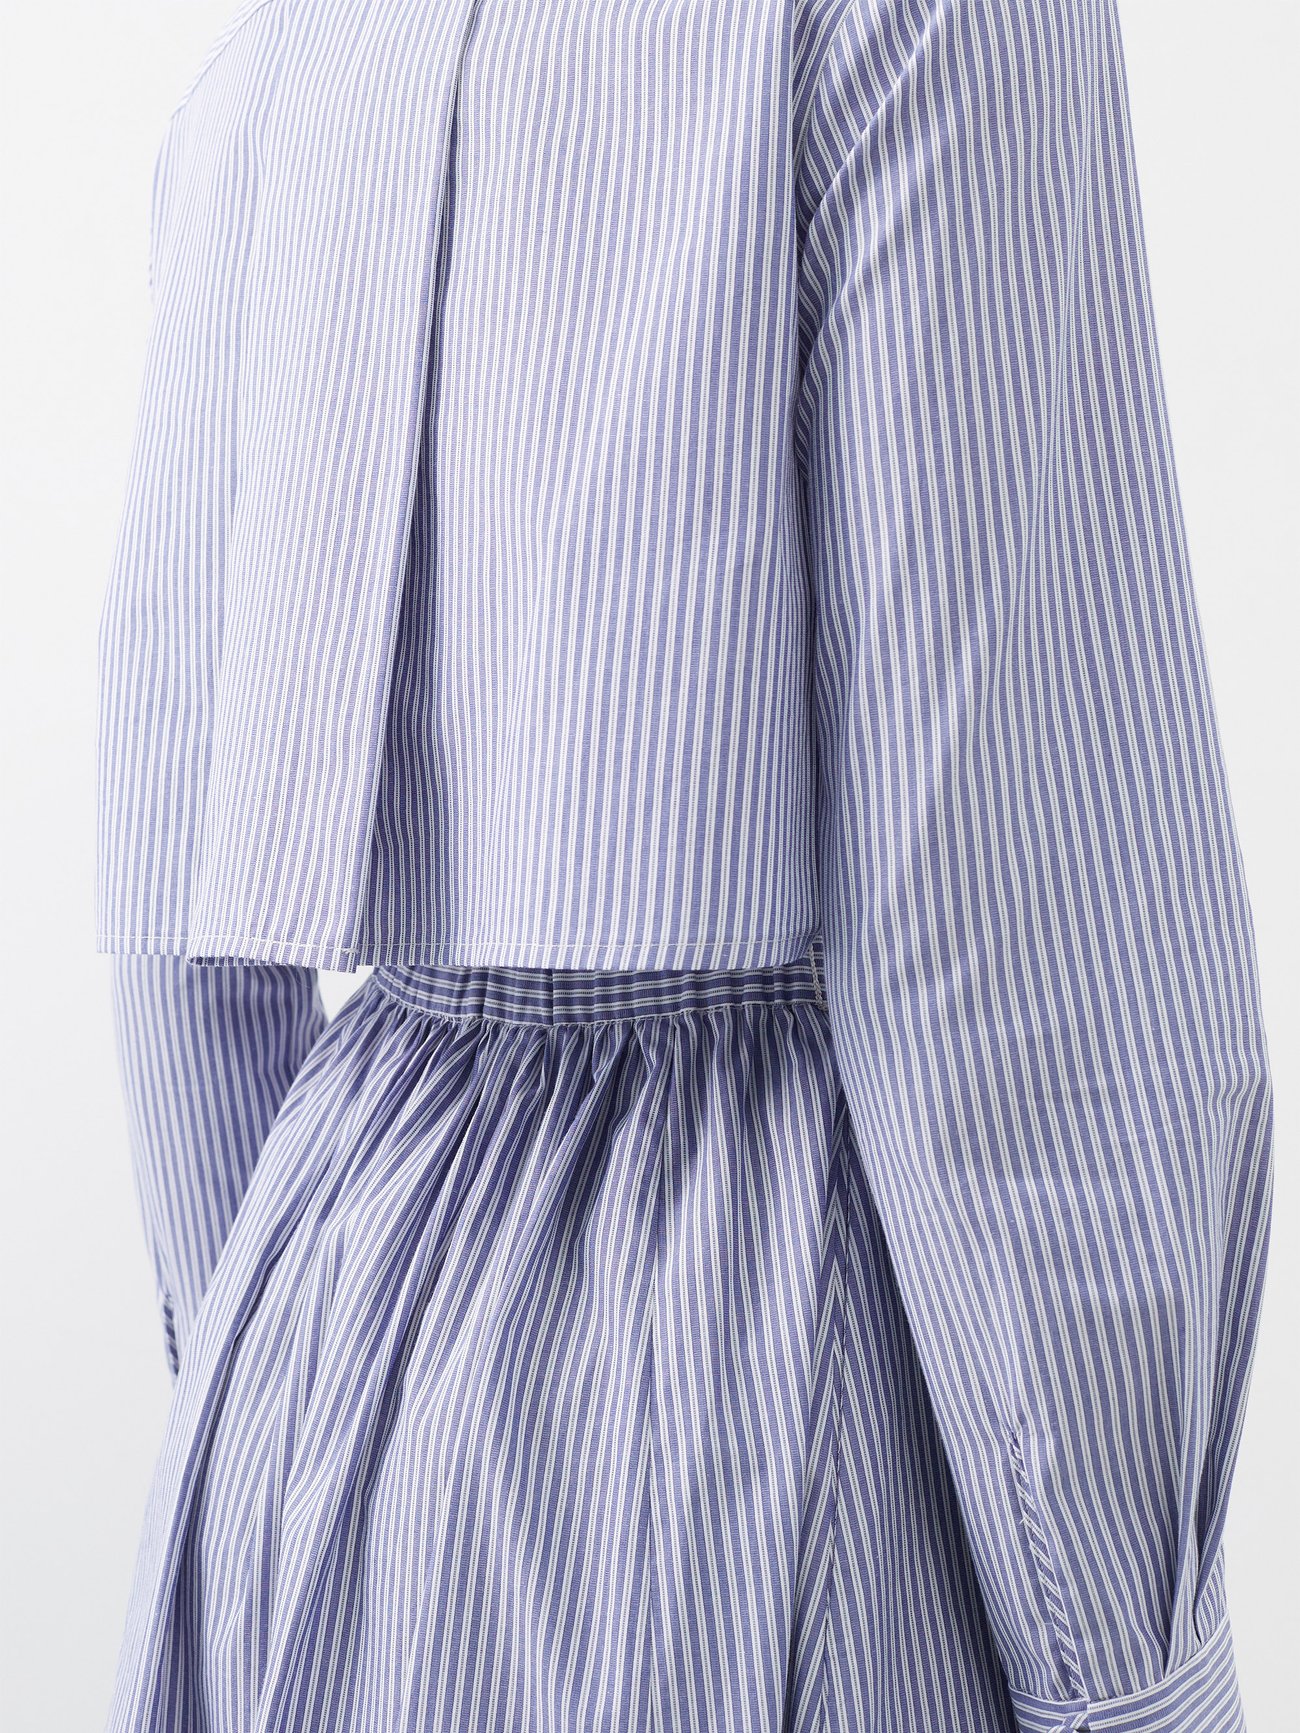 Cotton Poplin Lawn Stripe Fabric by The Yard Denim Jean look Shirting Shirt  Dress Fabric for Sewing Clothing - Blue White CN18